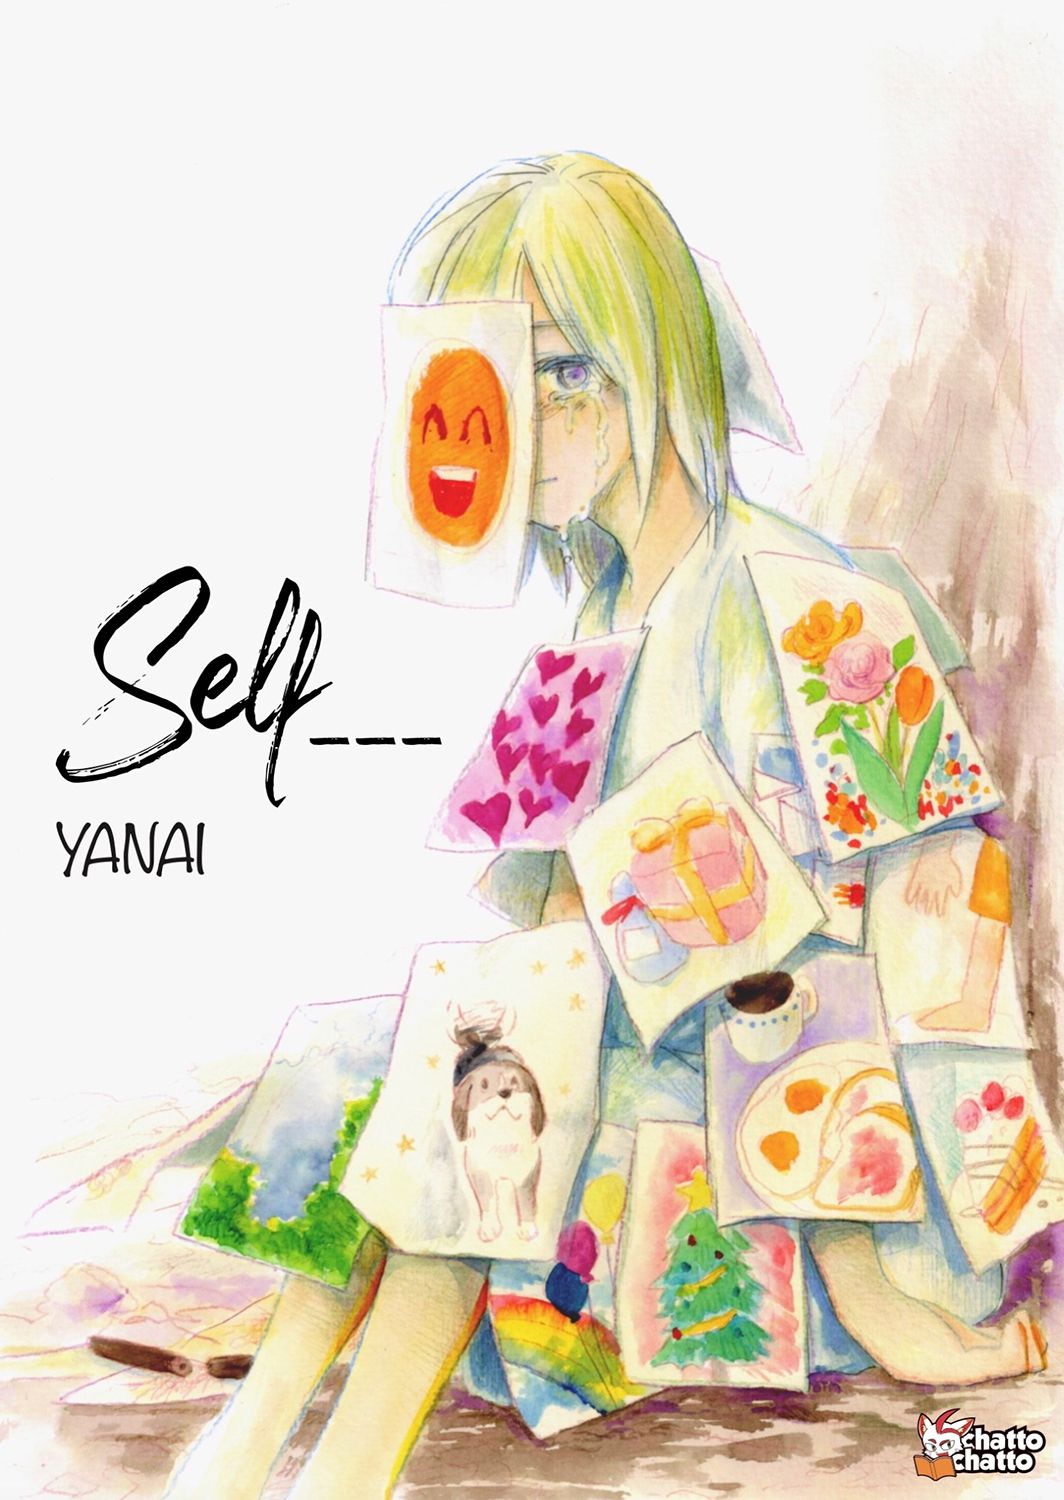 Self___